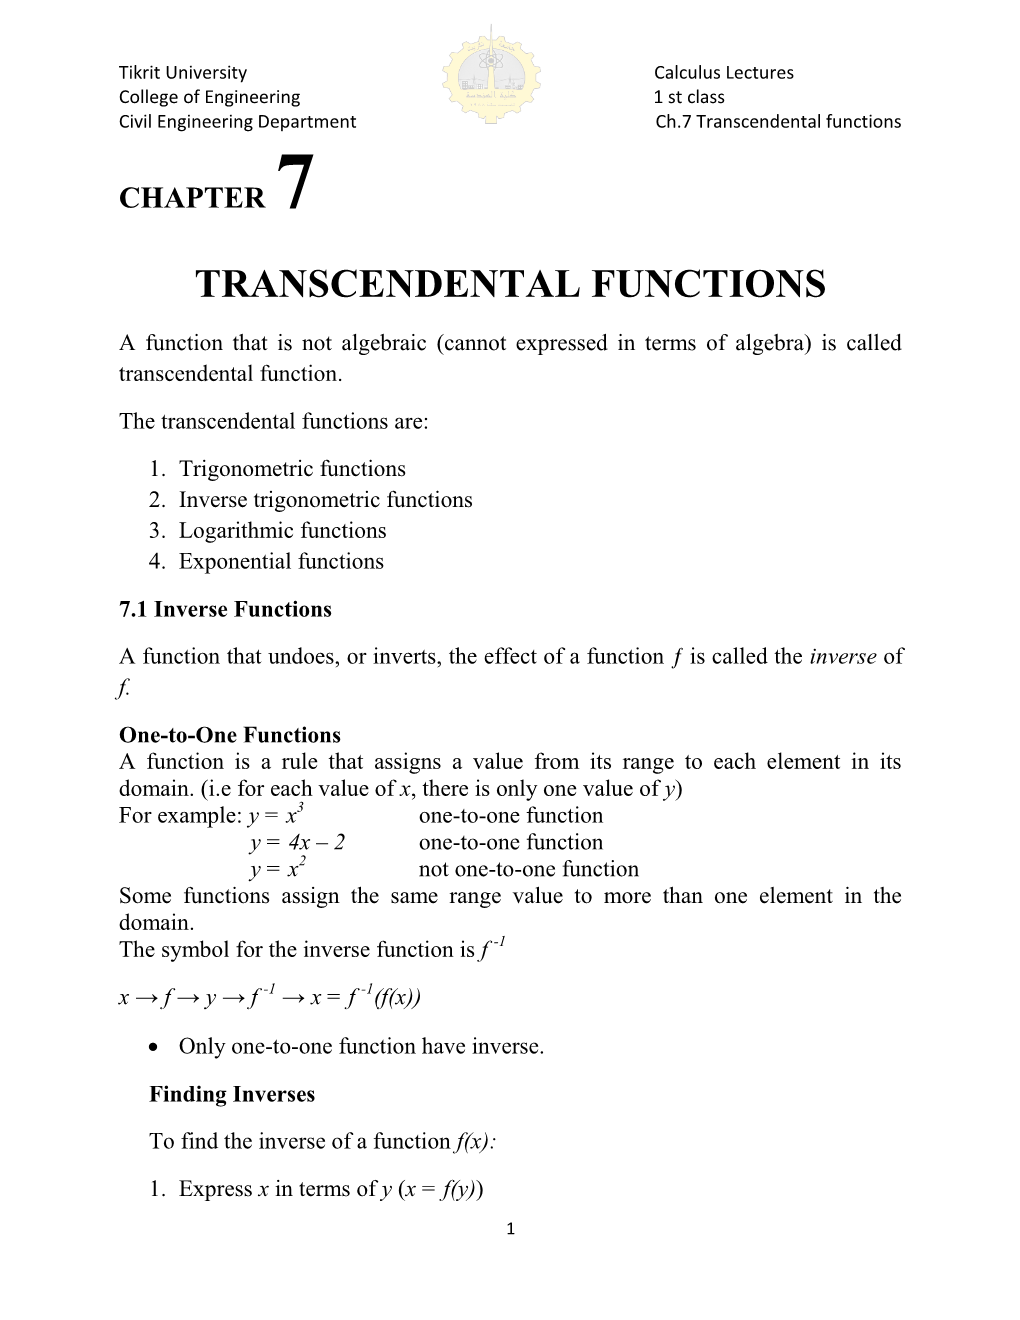 Transcendental Functions